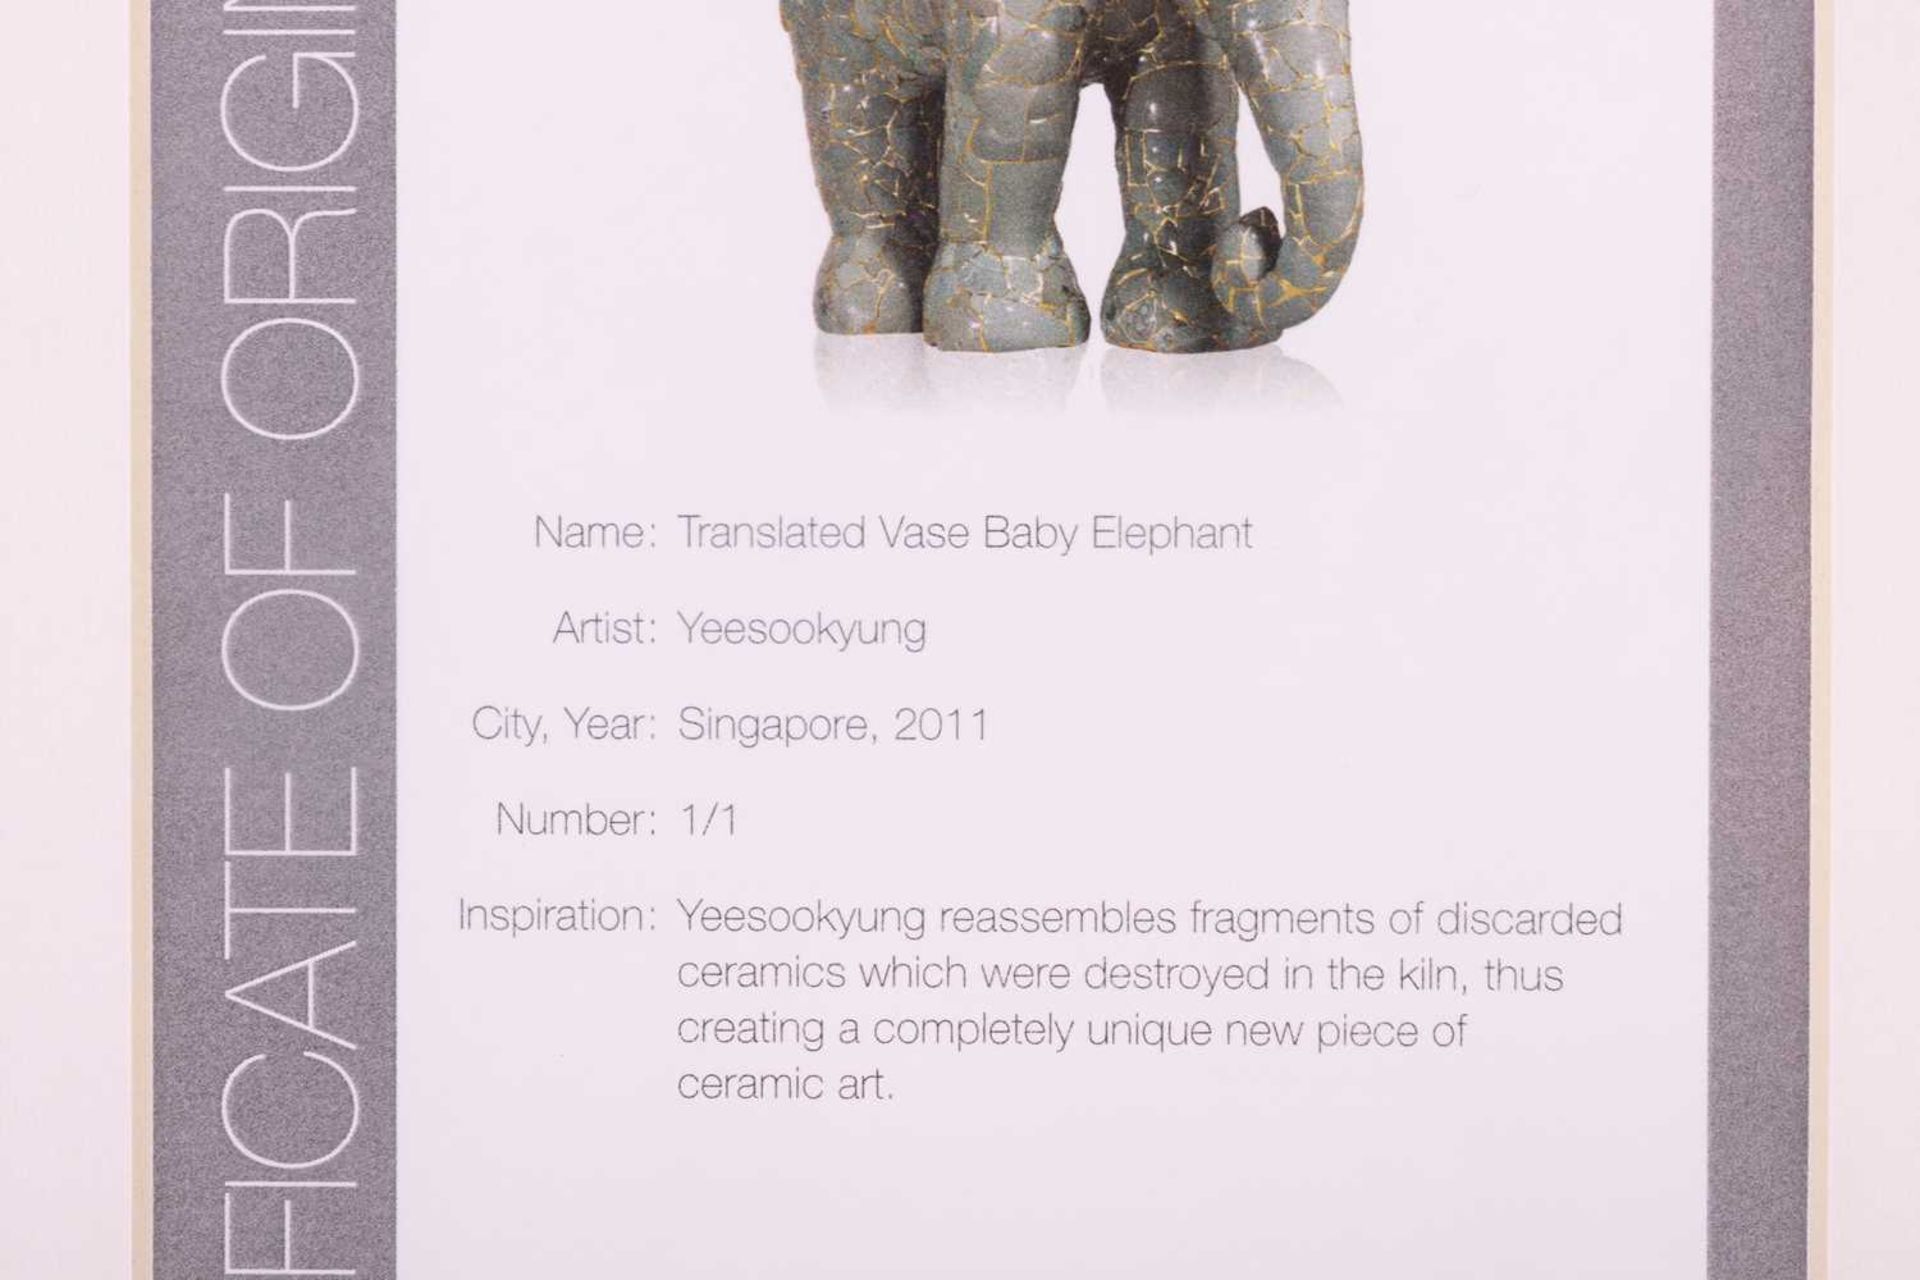 Yeesookyung (b. 1963) South Korean, 'Translated Vase Baby Elephant' (2012), celadon ceramic pieces f - Bild 11 aus 16